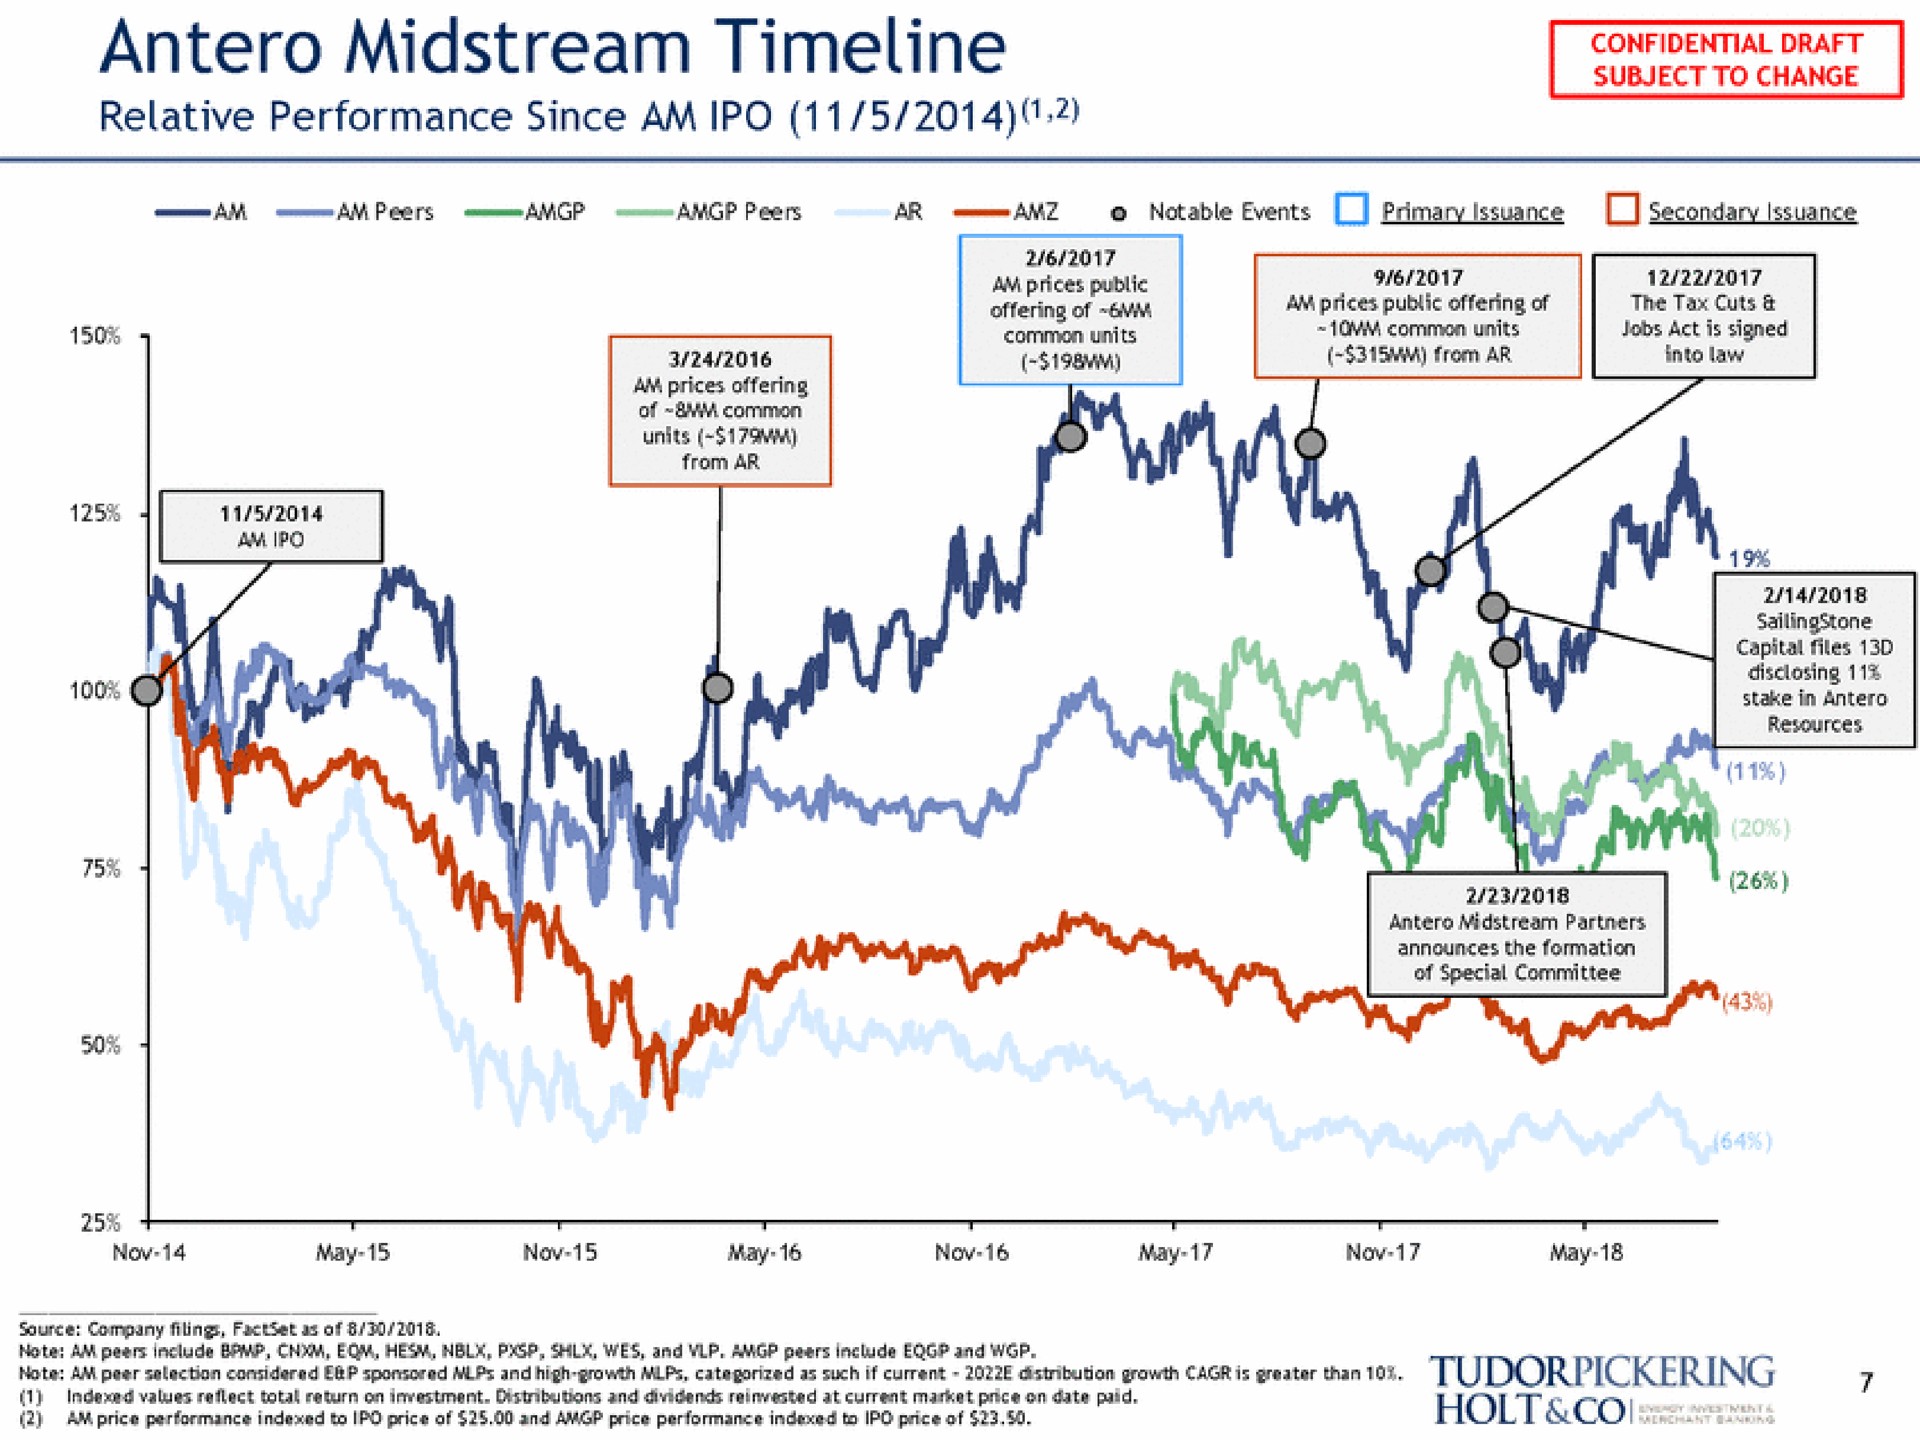 midstream relative performance since am | Tudor, Pickering, Holt & Co